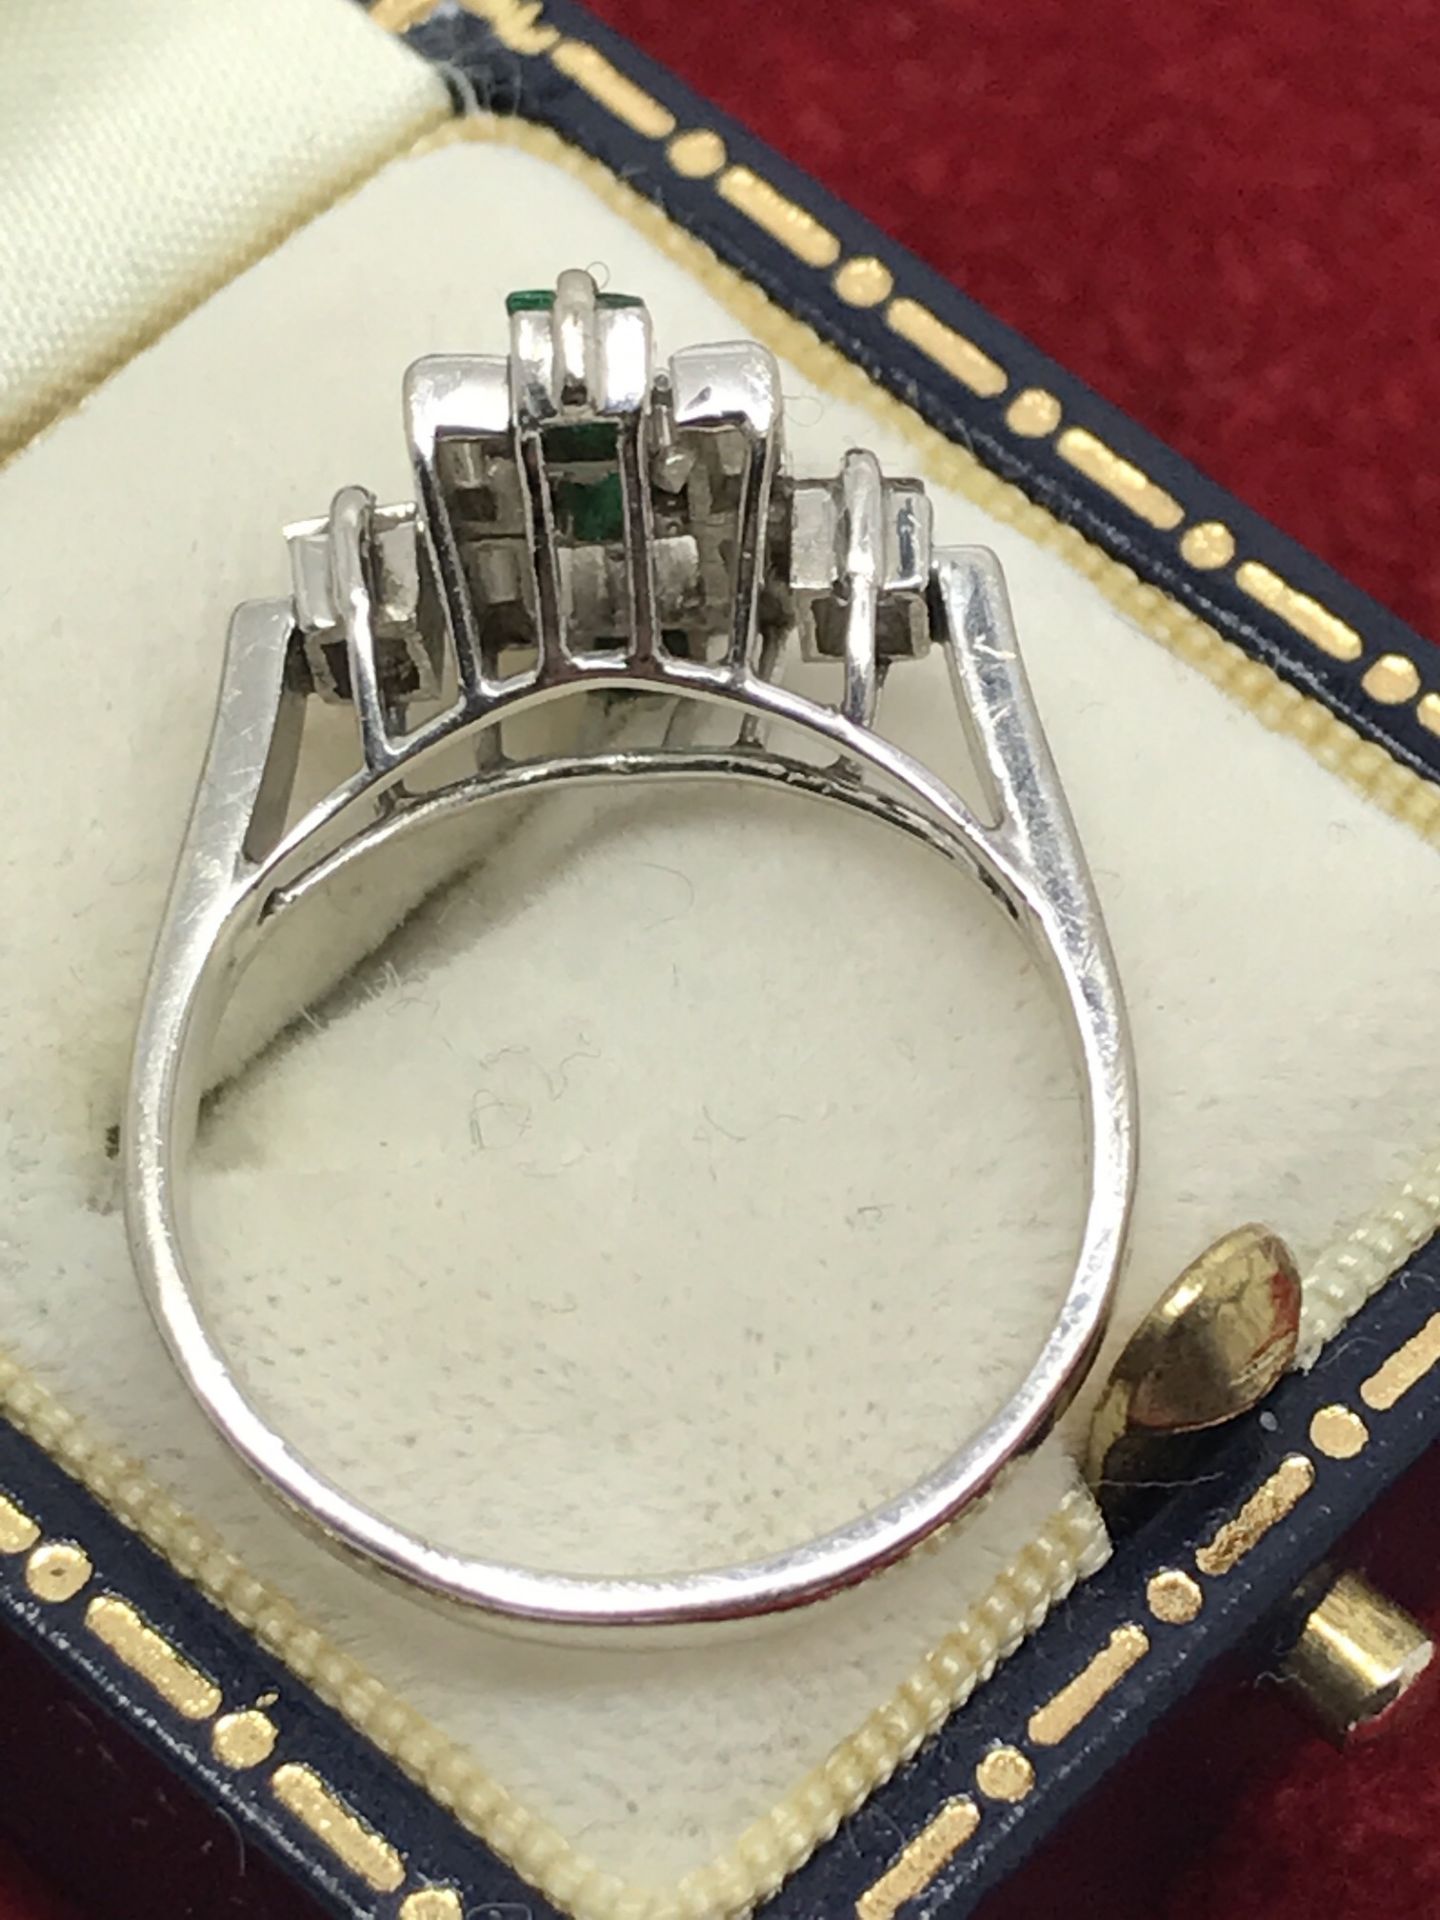 LOVELY VINTAGE EMERALD & DIAMOND RING SET IN WHITE GOLD - Image 3 of 4